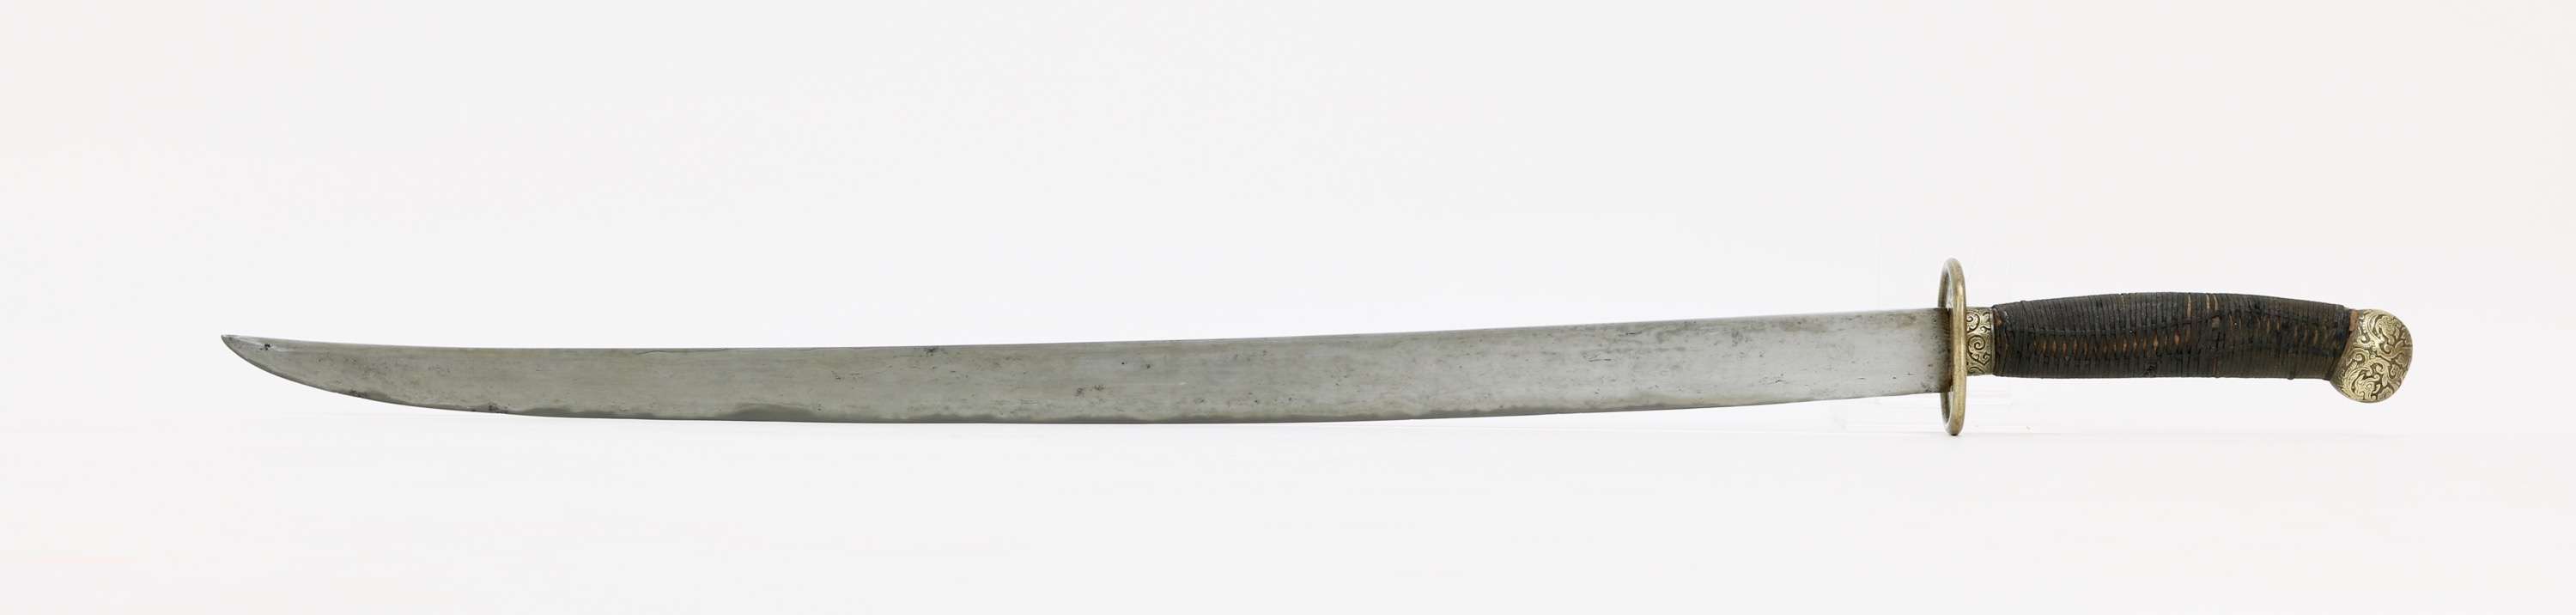 Large southern Chinese saber